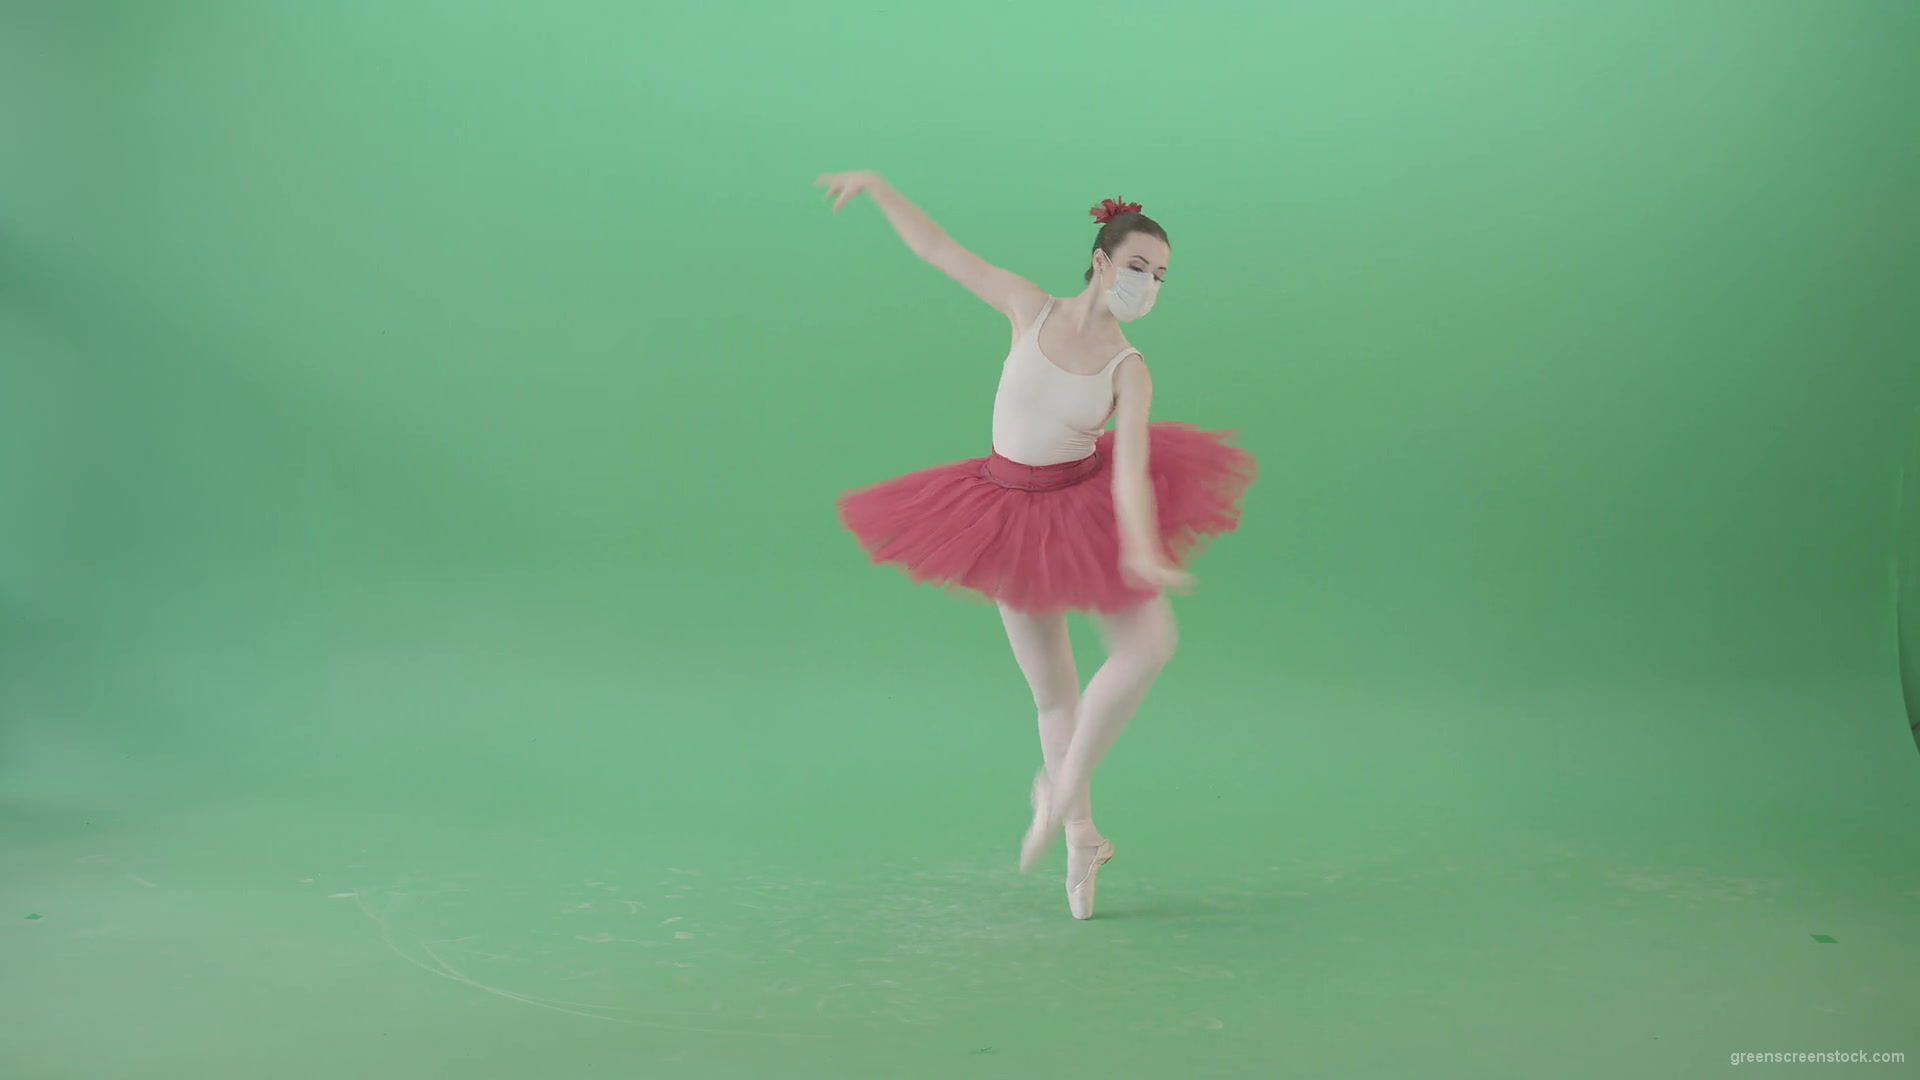 Ballet-Girl-in-Corona-Virus-Mask-Jumping-like-ballerina-isolated-on-green-screen-4K-Video-Footage-1920_007 Green Screen Stock